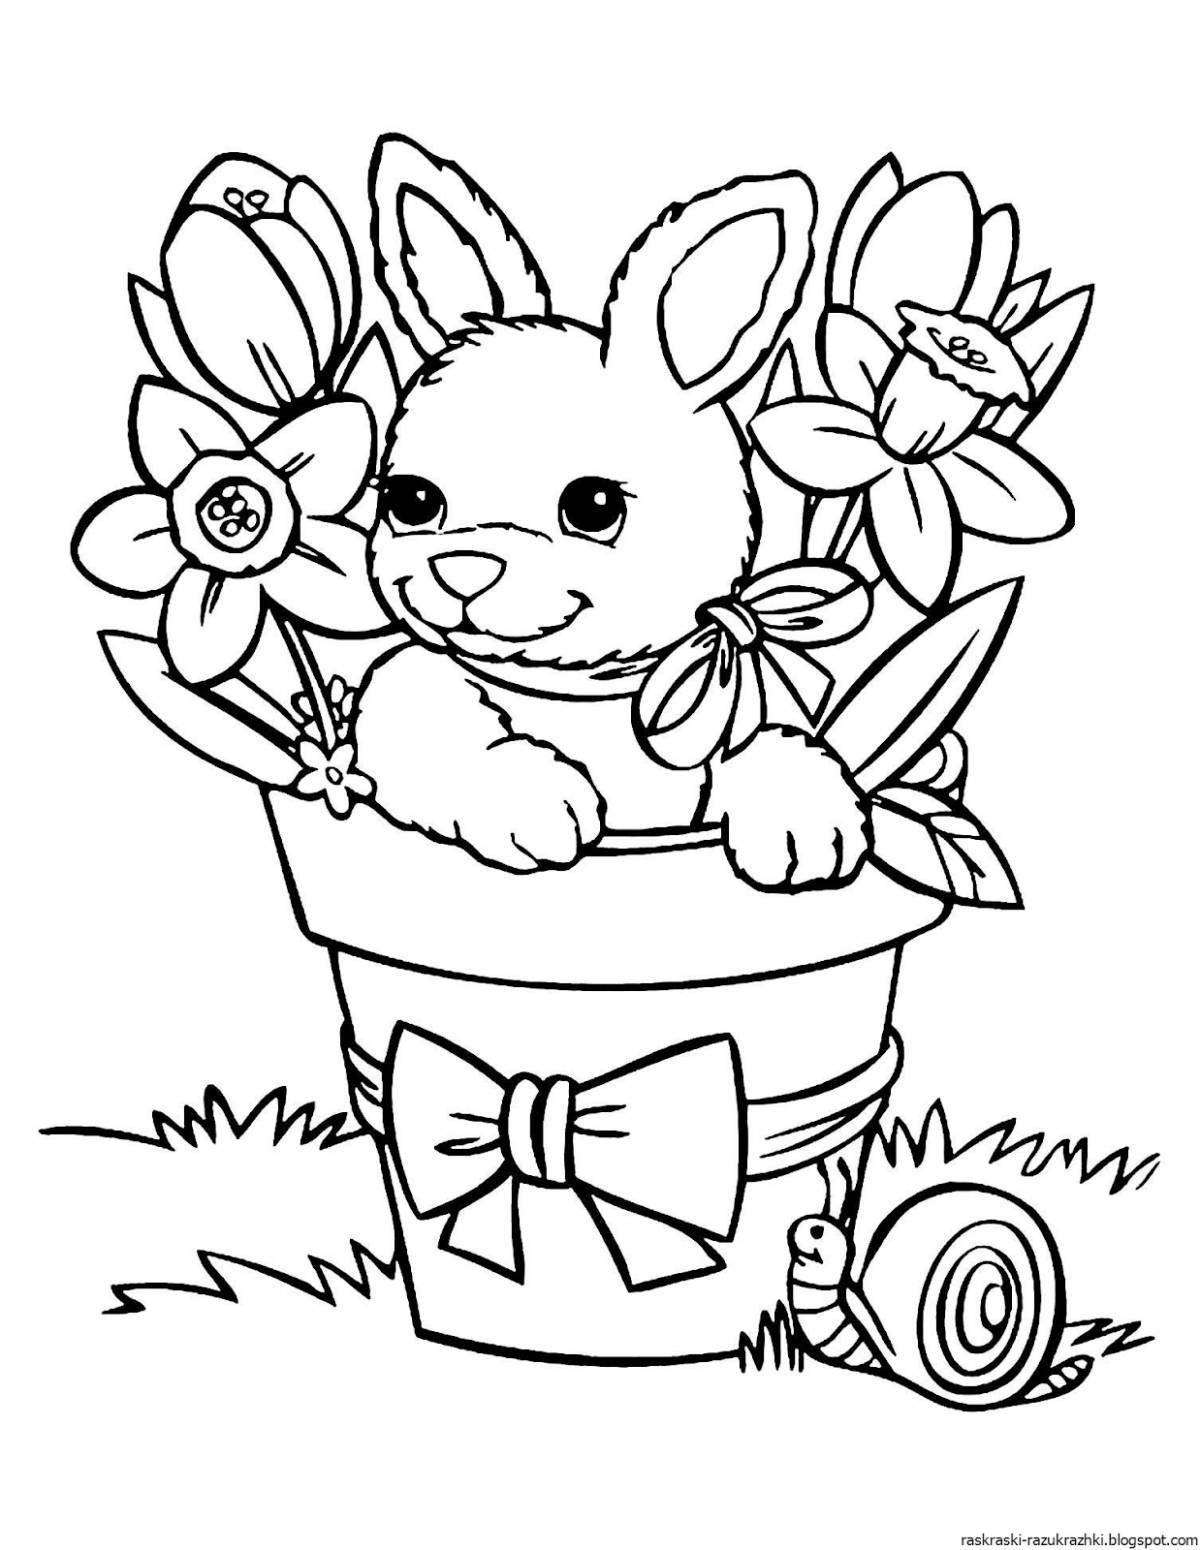 Fun coloring book for bunny girls